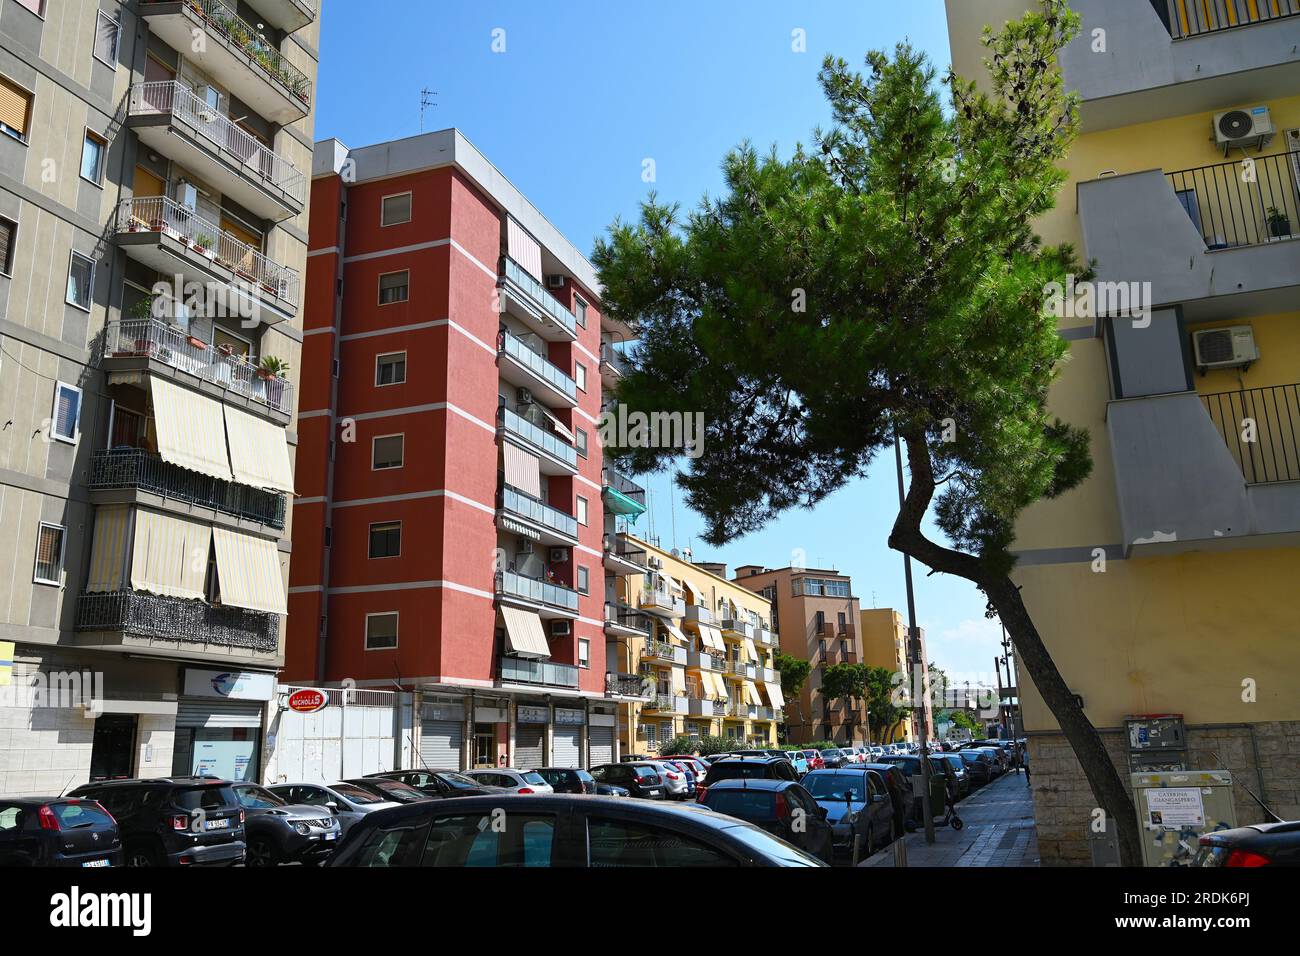 Residential area in Bari Stock Photo